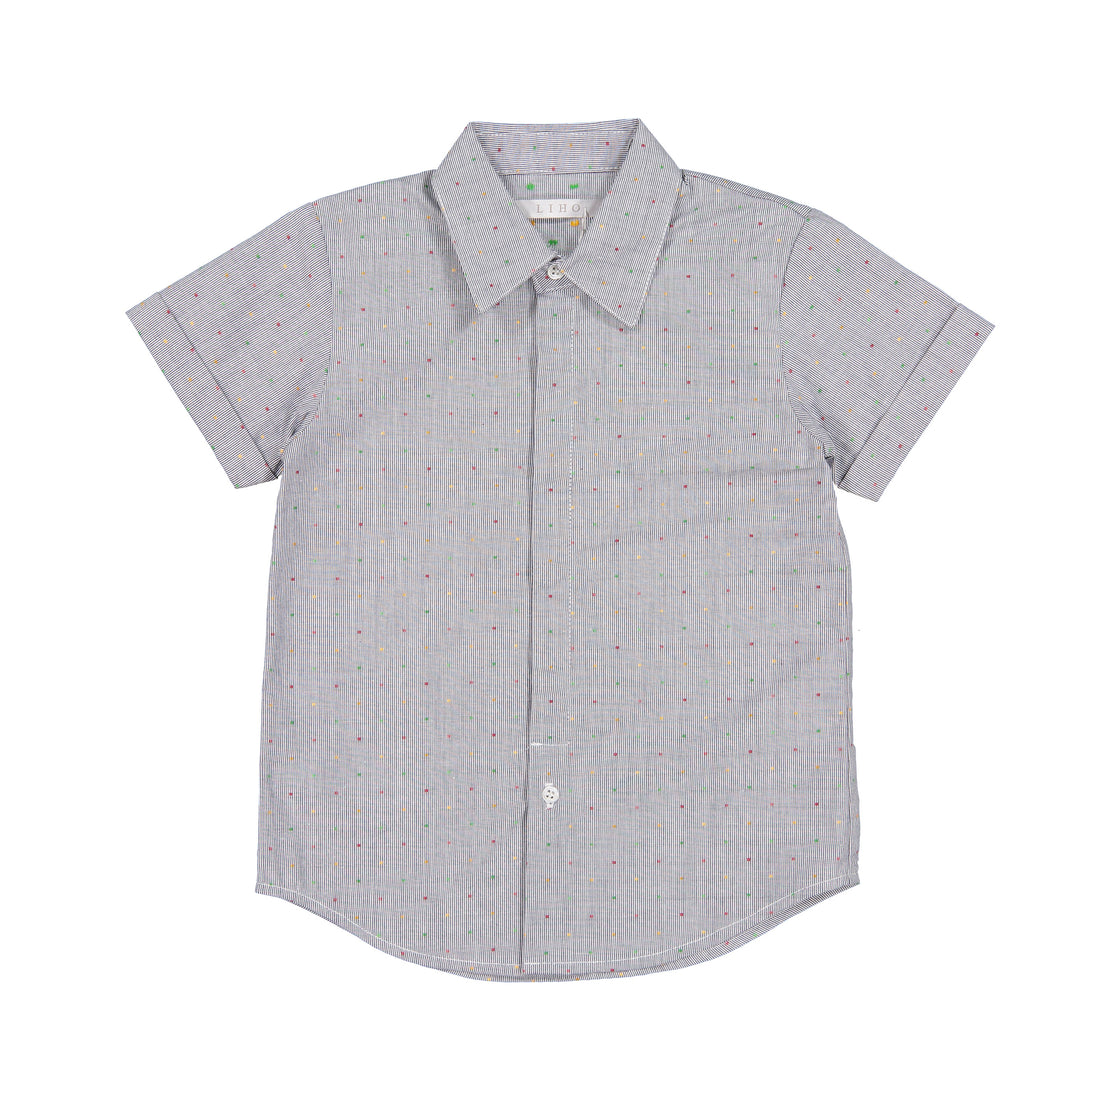 Liho Grey Stripe/Dot Ray Shirt